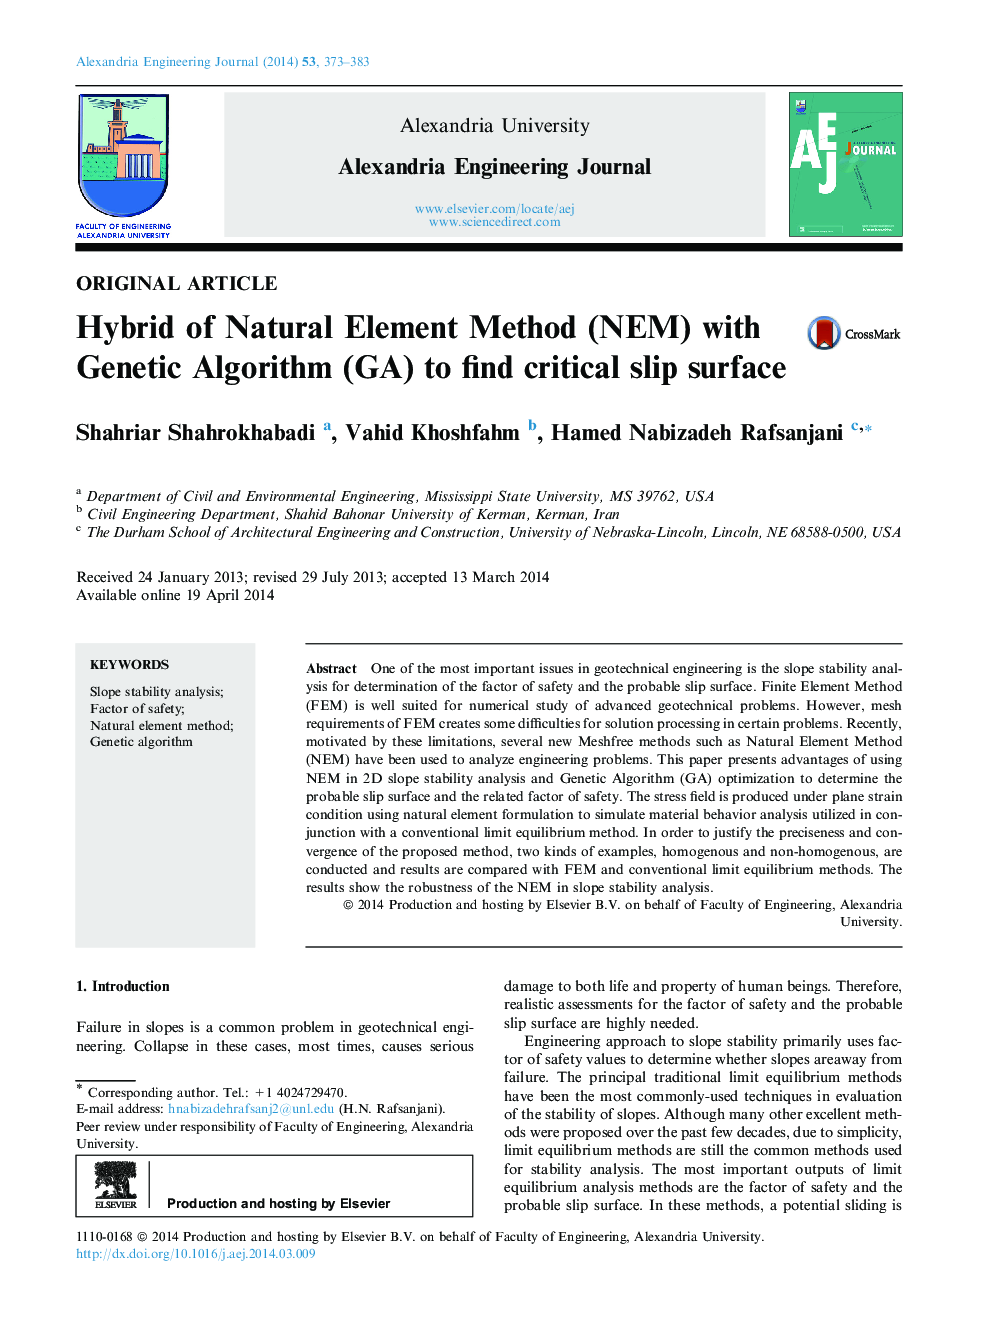 Hybrid of Natural Element Method (NEM) with Genetic Algorithm (GA) to find critical slip surface